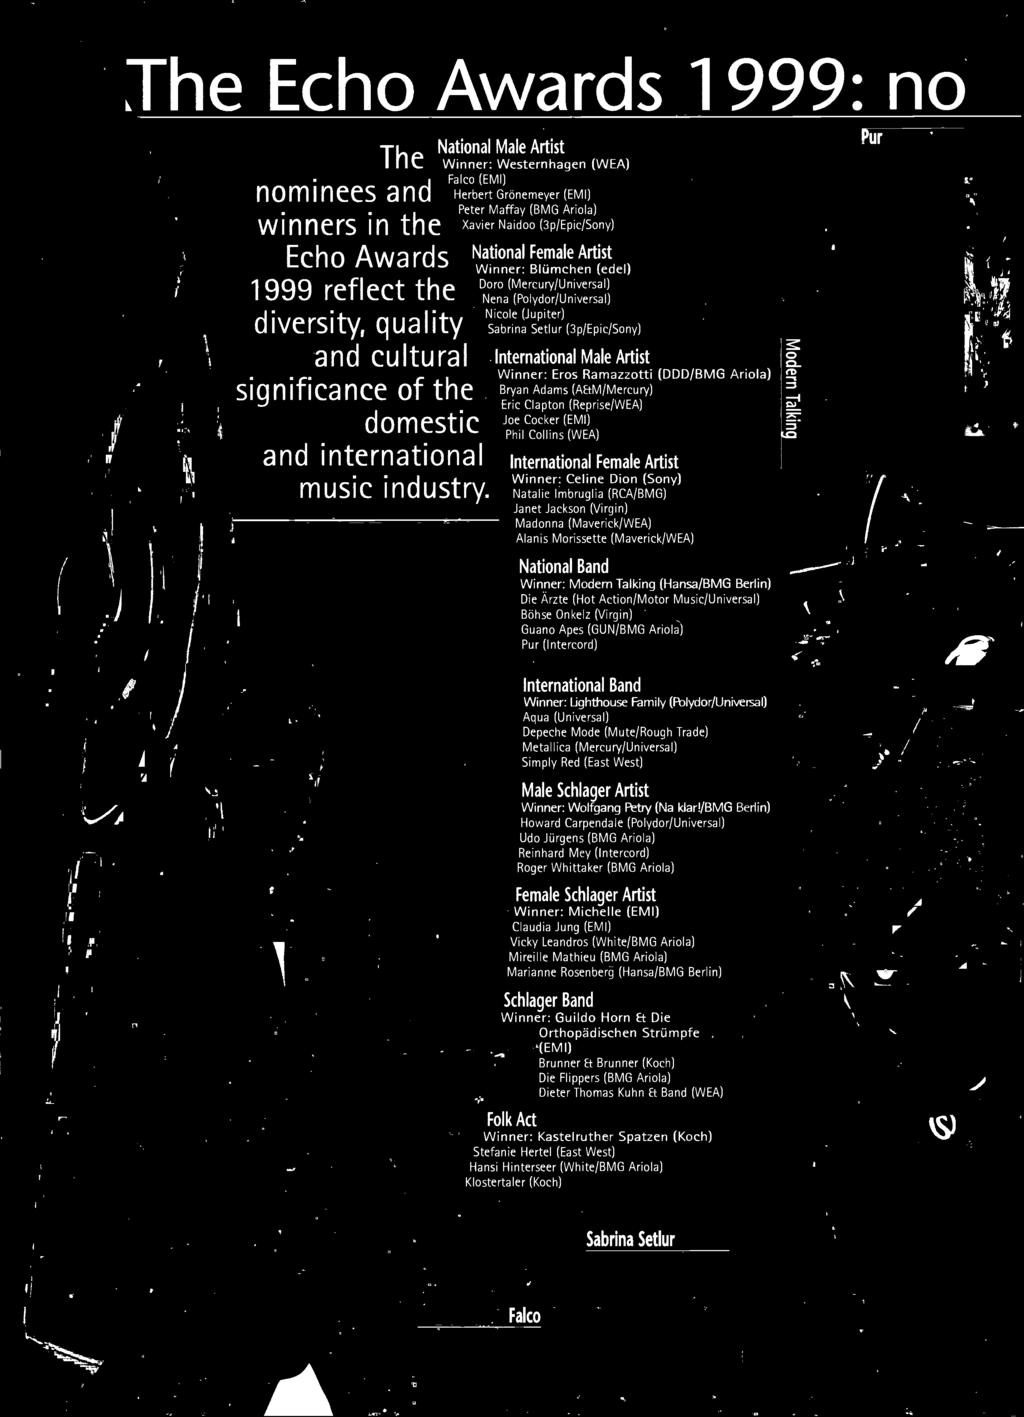 (Reprise/WEA) Joe Cocker (EMI) Phil Collins (VVEA) International Female Artist Winner: Celine Dion (Sony) Natalie Imbruglia (RCA/BMG) Janet Jackson (Virgin) Madonna (Maverick/WEA) Alanis Morissette